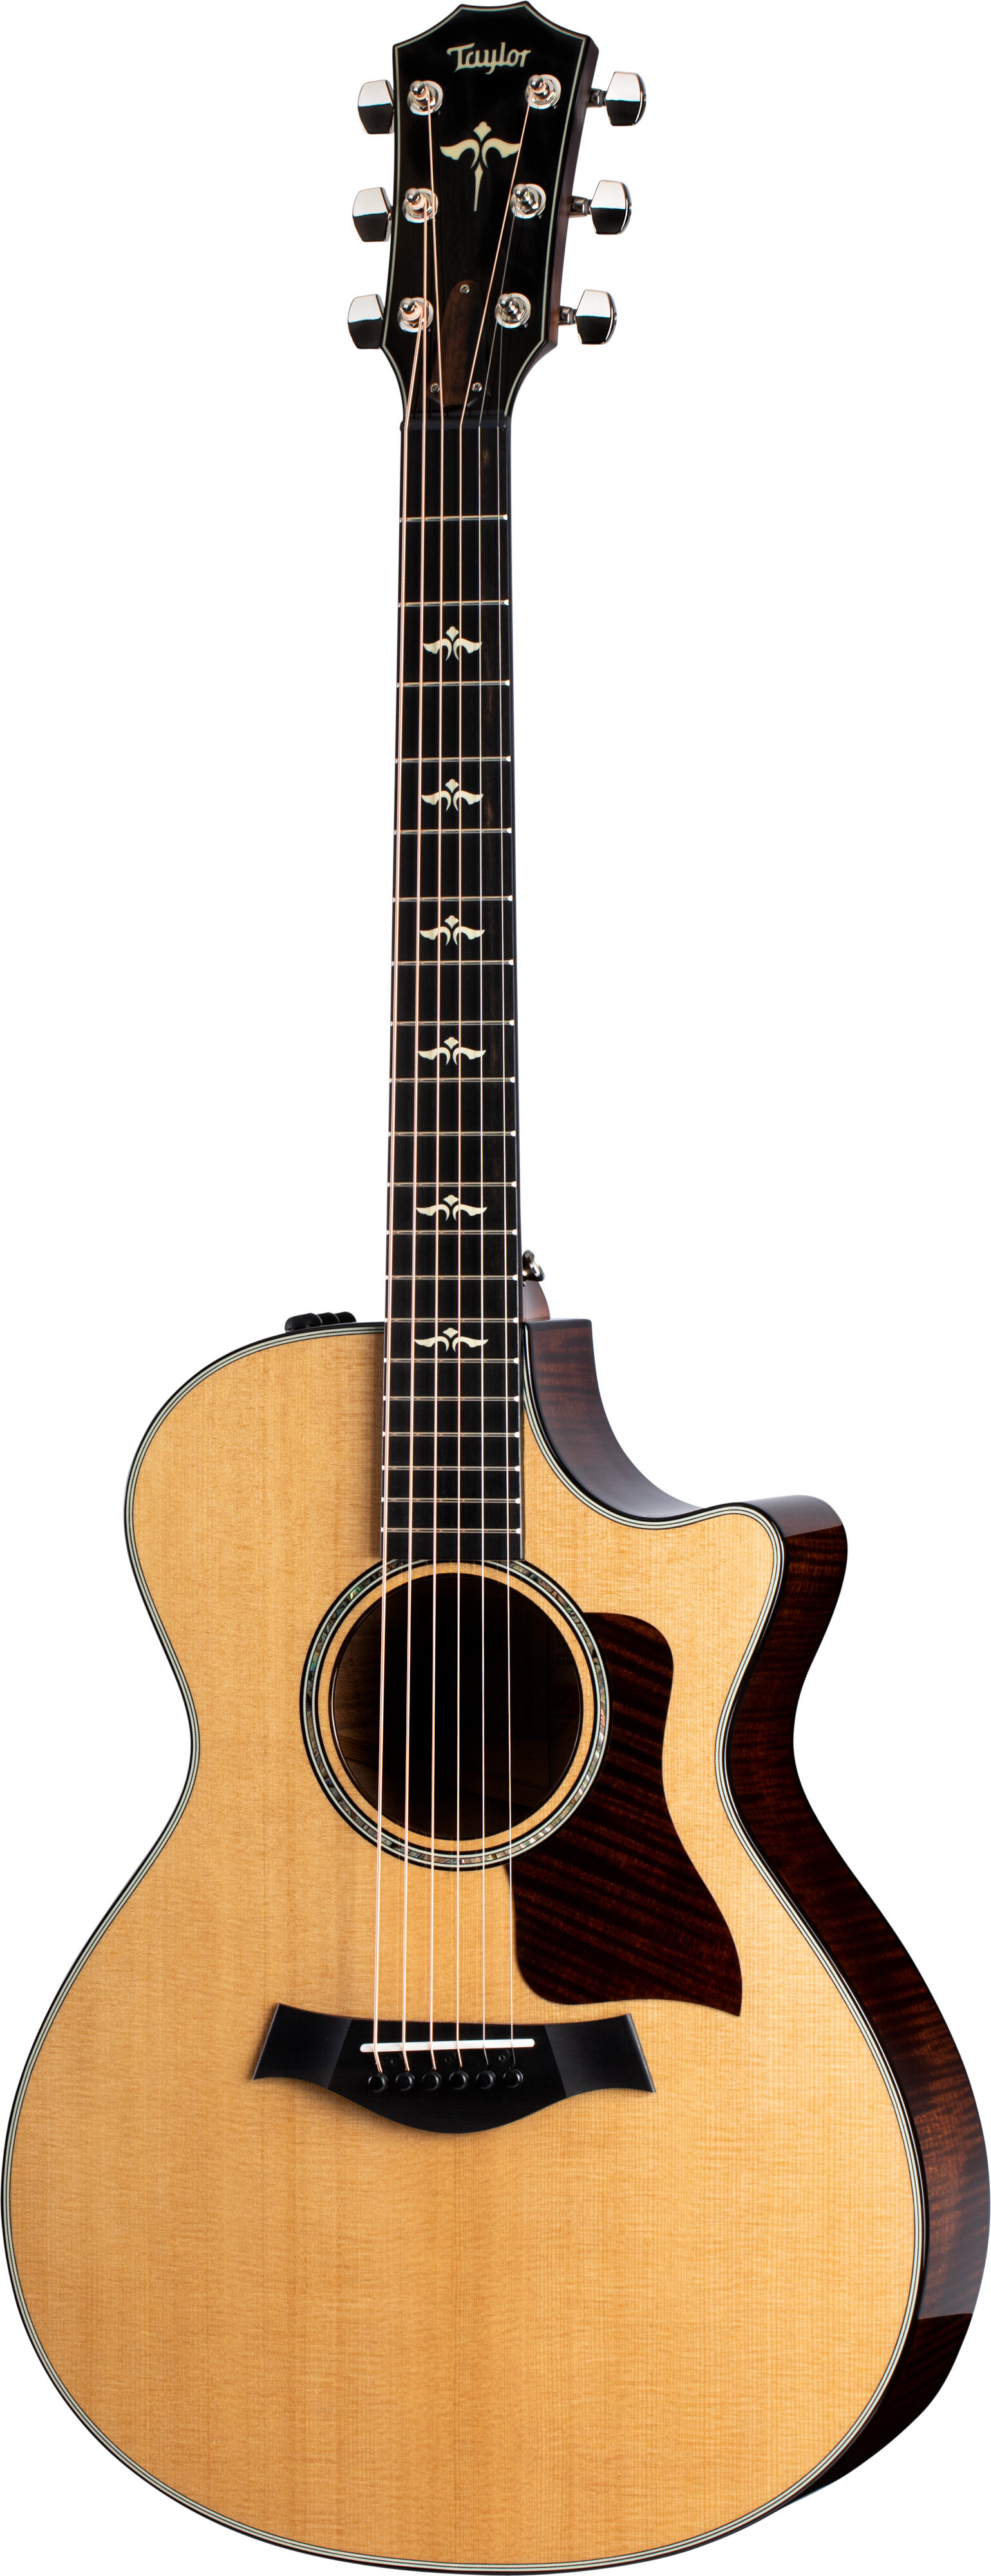 Taylor 612ce V Class Grand Concert A/E with Case -  Taylor Guitars, 612ce-22